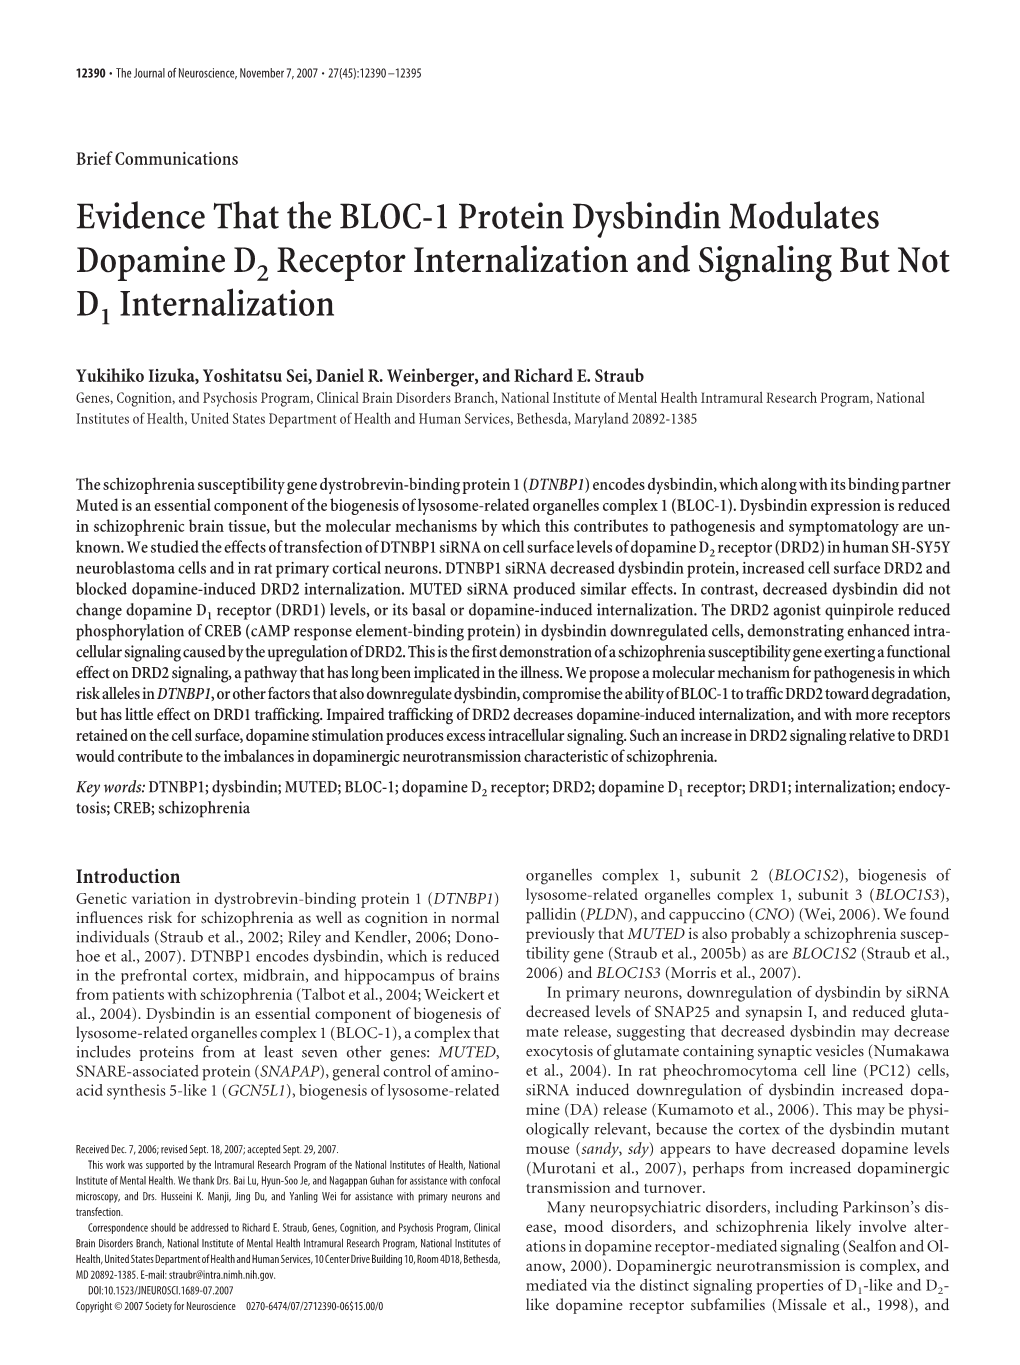 Evidence That the BLOC-1 Protein Dysbindin Modulates Dopamine D2